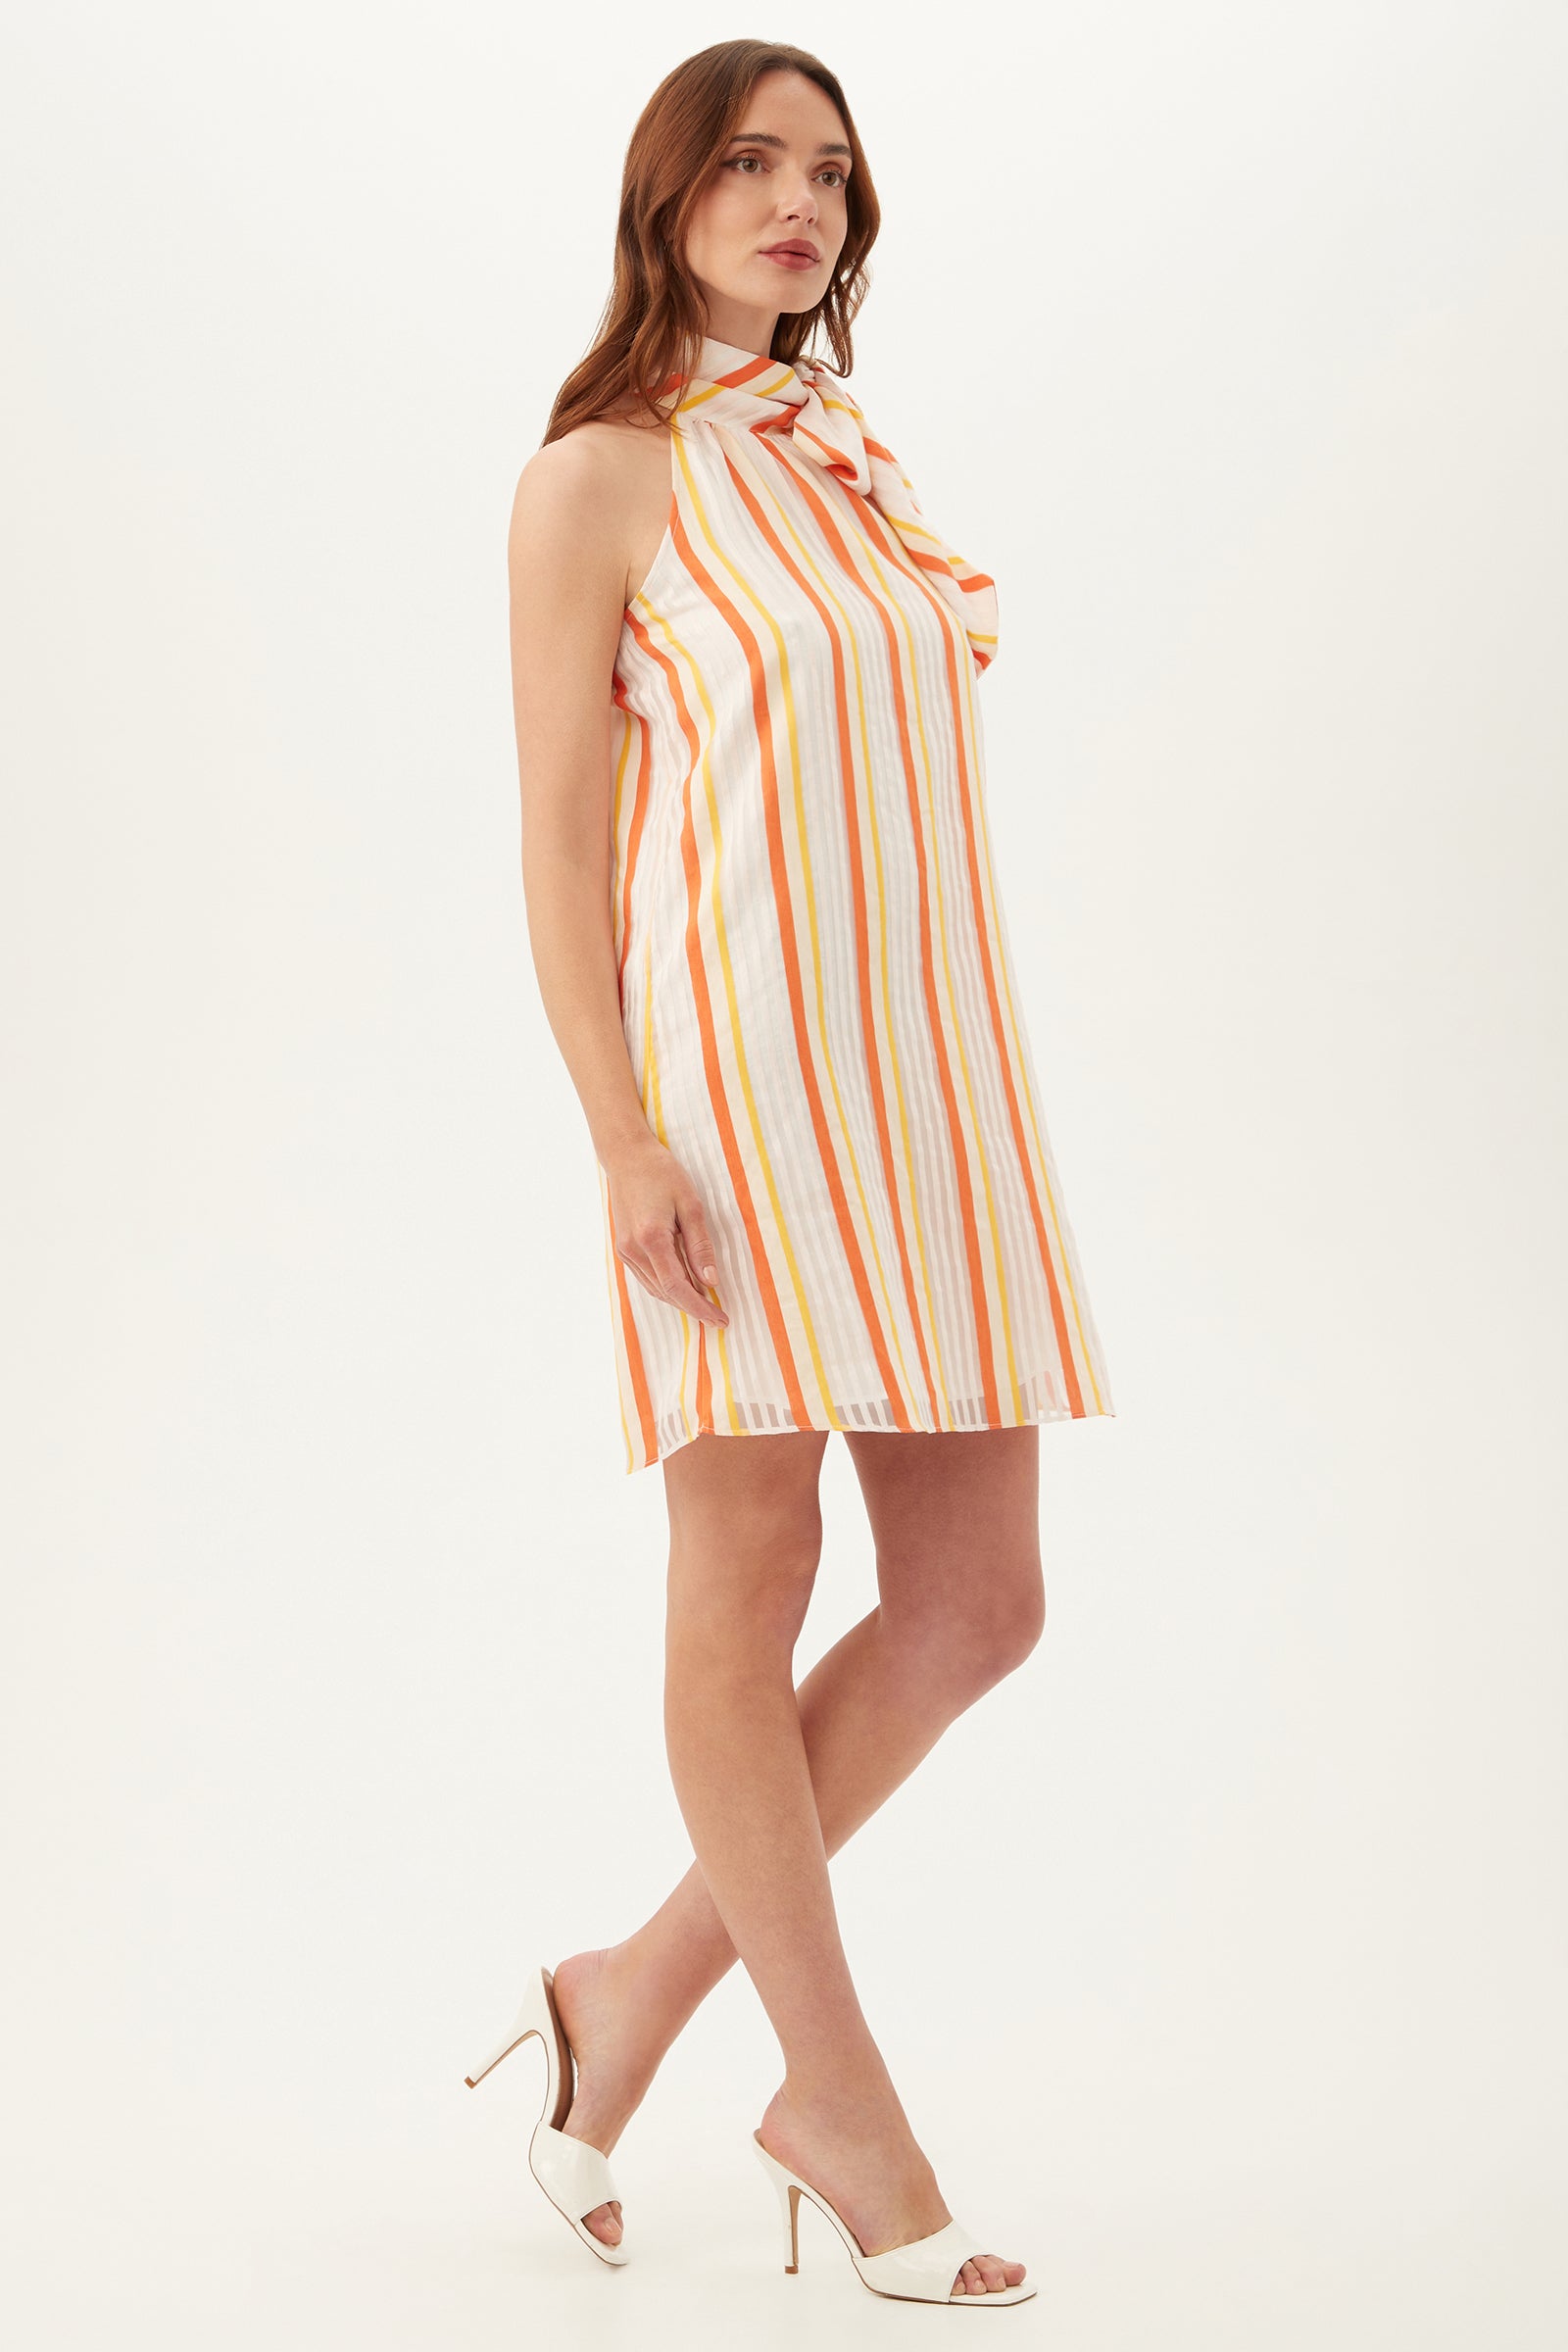 Trina Turk Global Silk Stripe Mini Dress in Orange